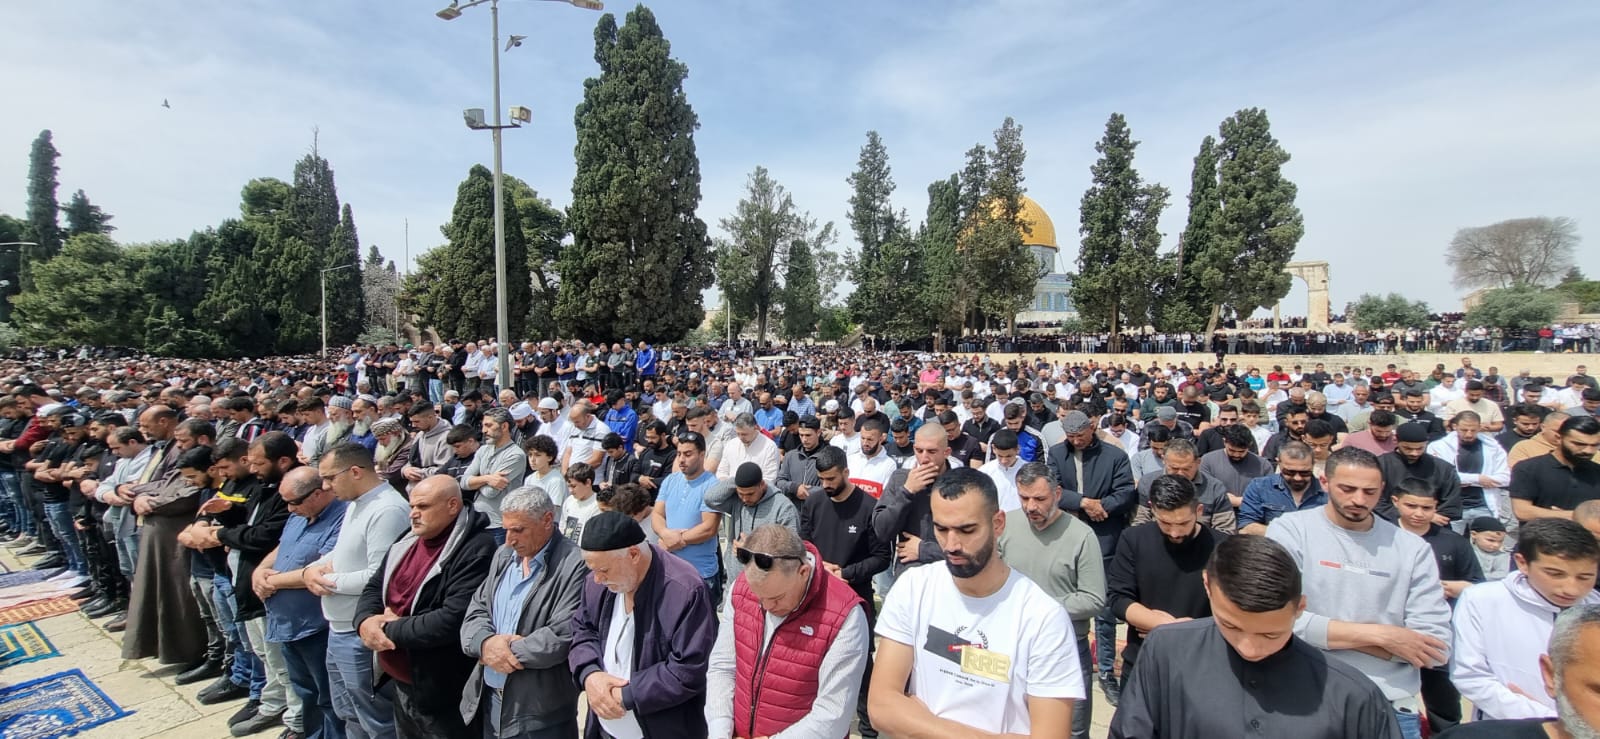 125,000 Palestinians perform Friday Prayers at Aqsa Mosque